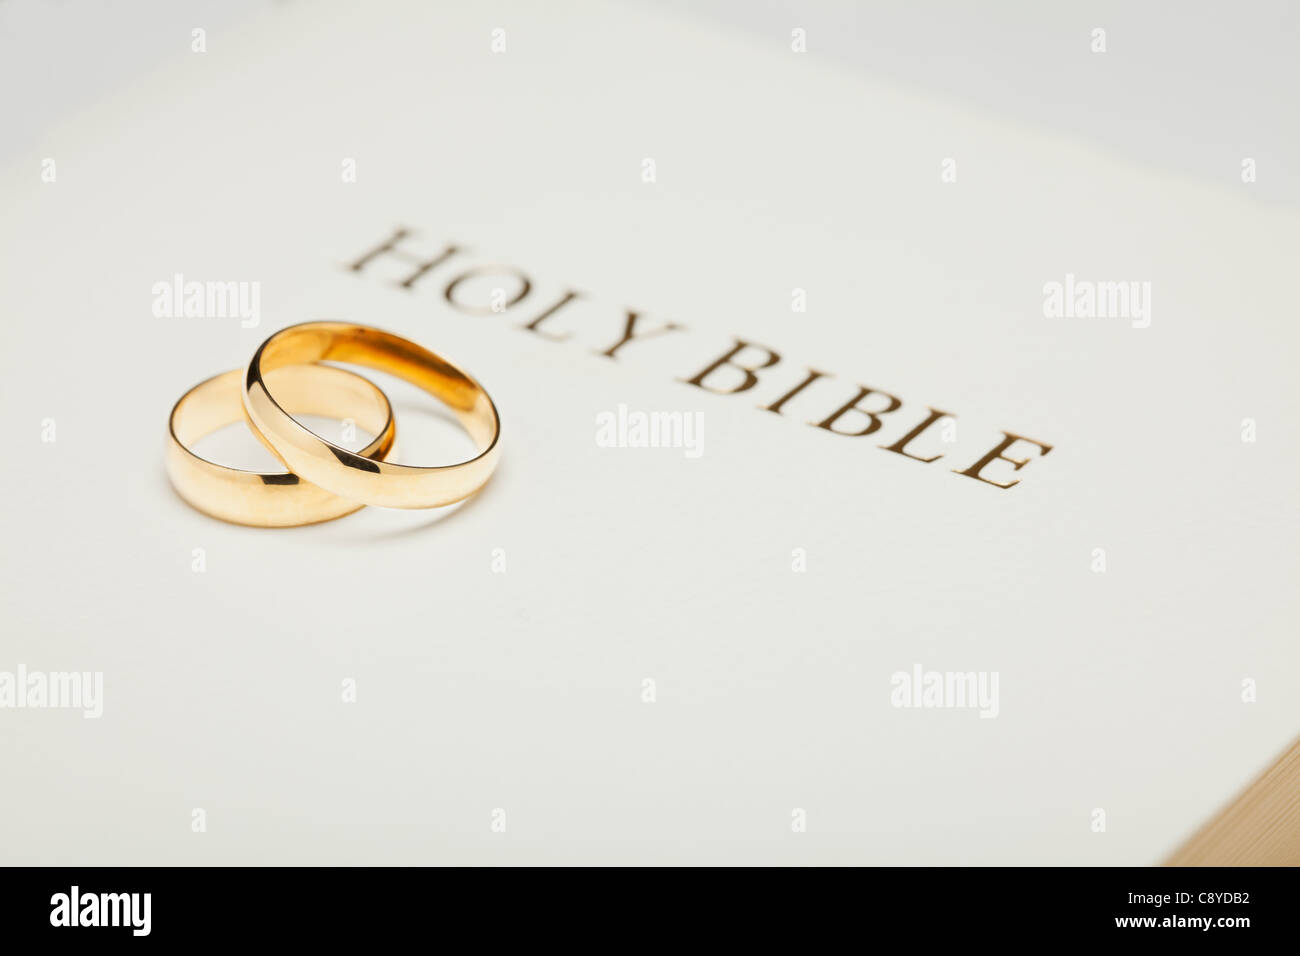 USA, Illinois, Metamora, Two wedding rings on dictionary Stock Photo